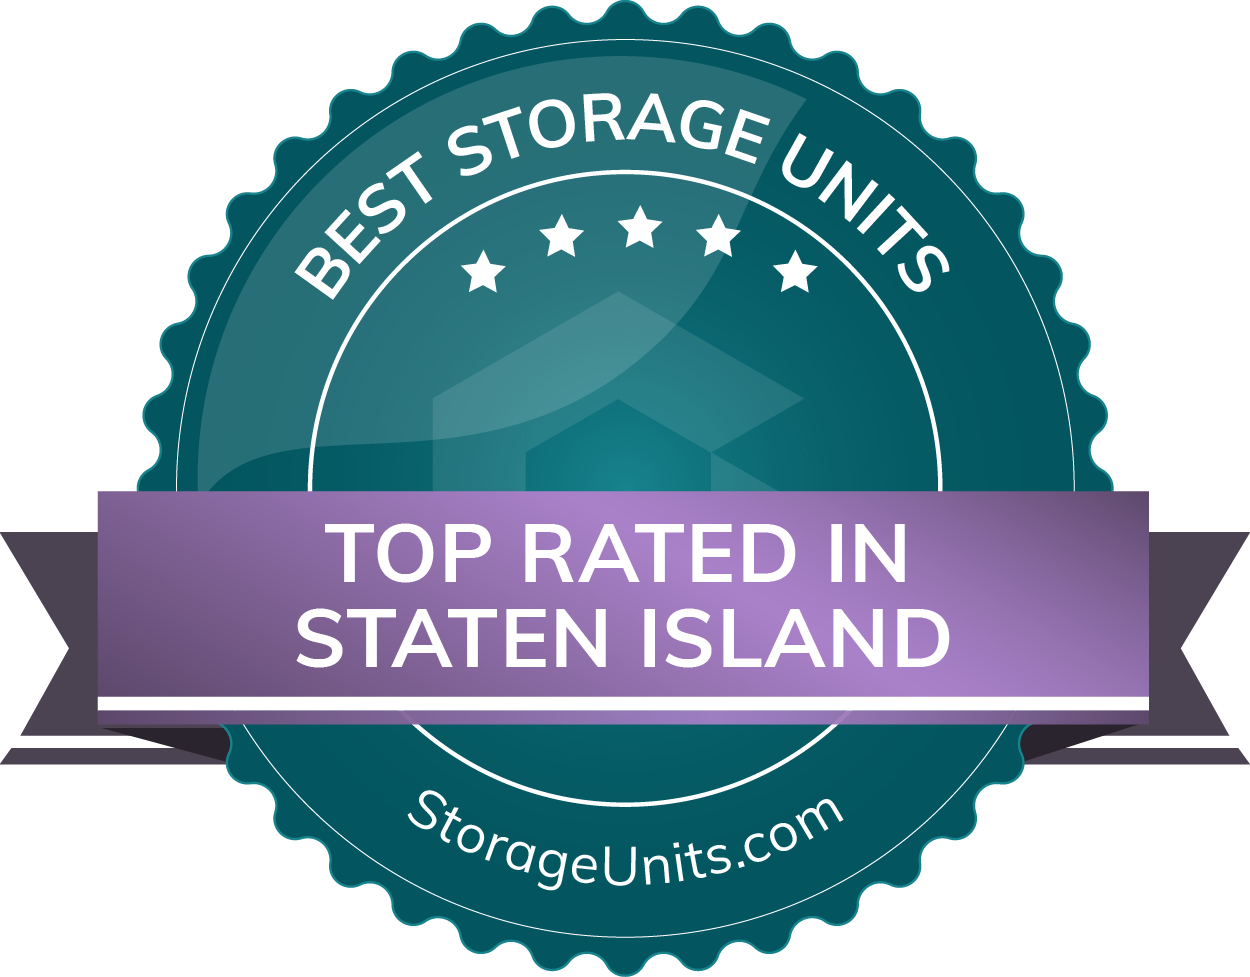 Best Self Storage Units in Staten Island, New York of 2022